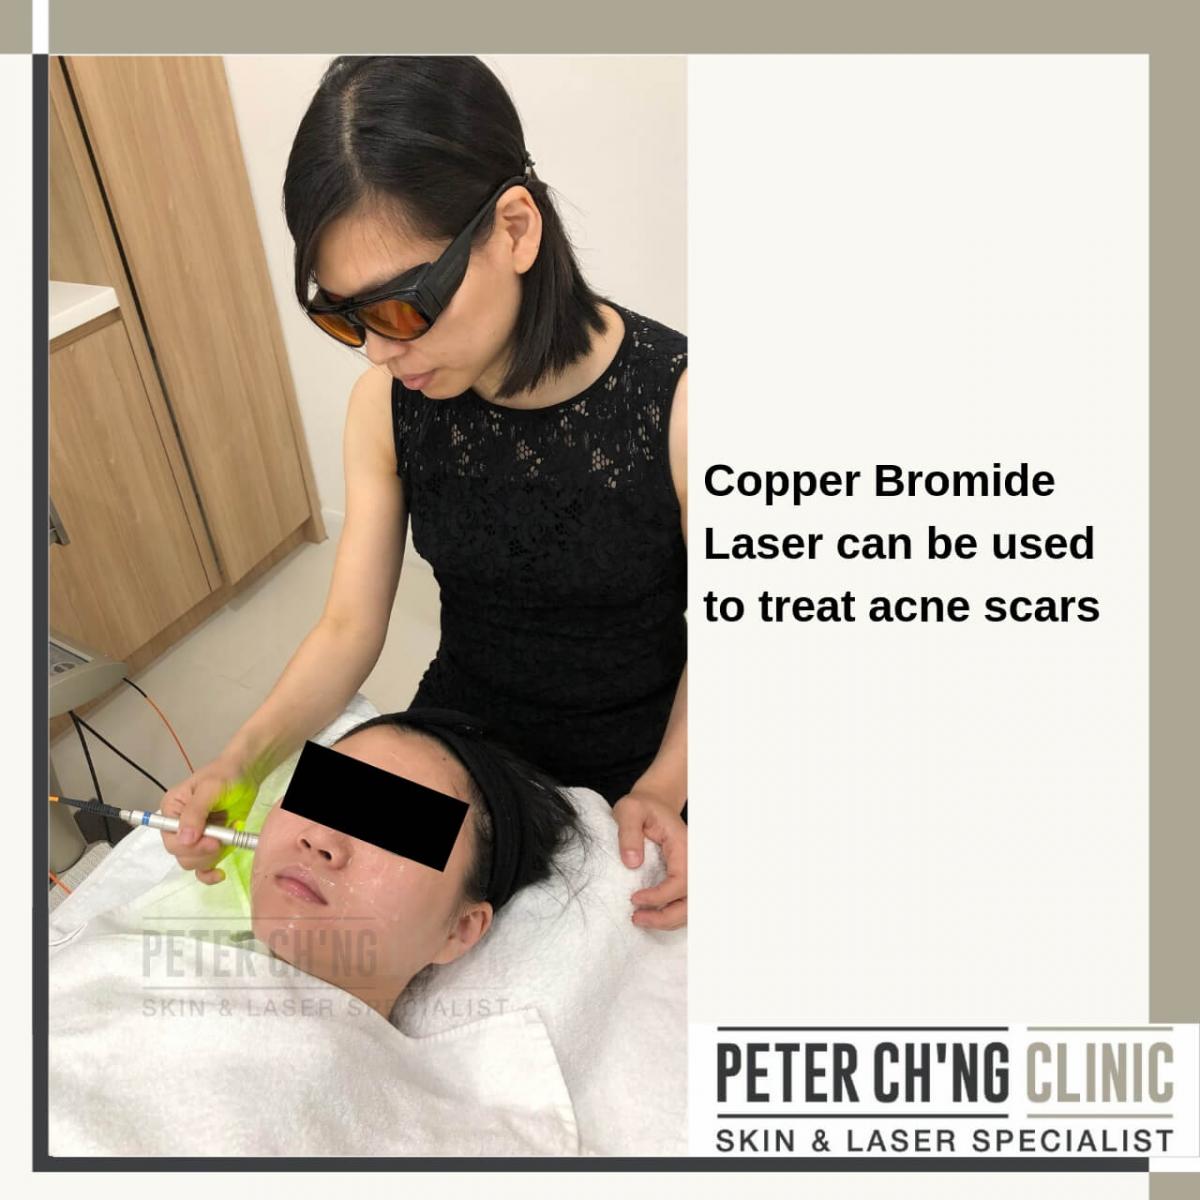 Copper Bromide Laser